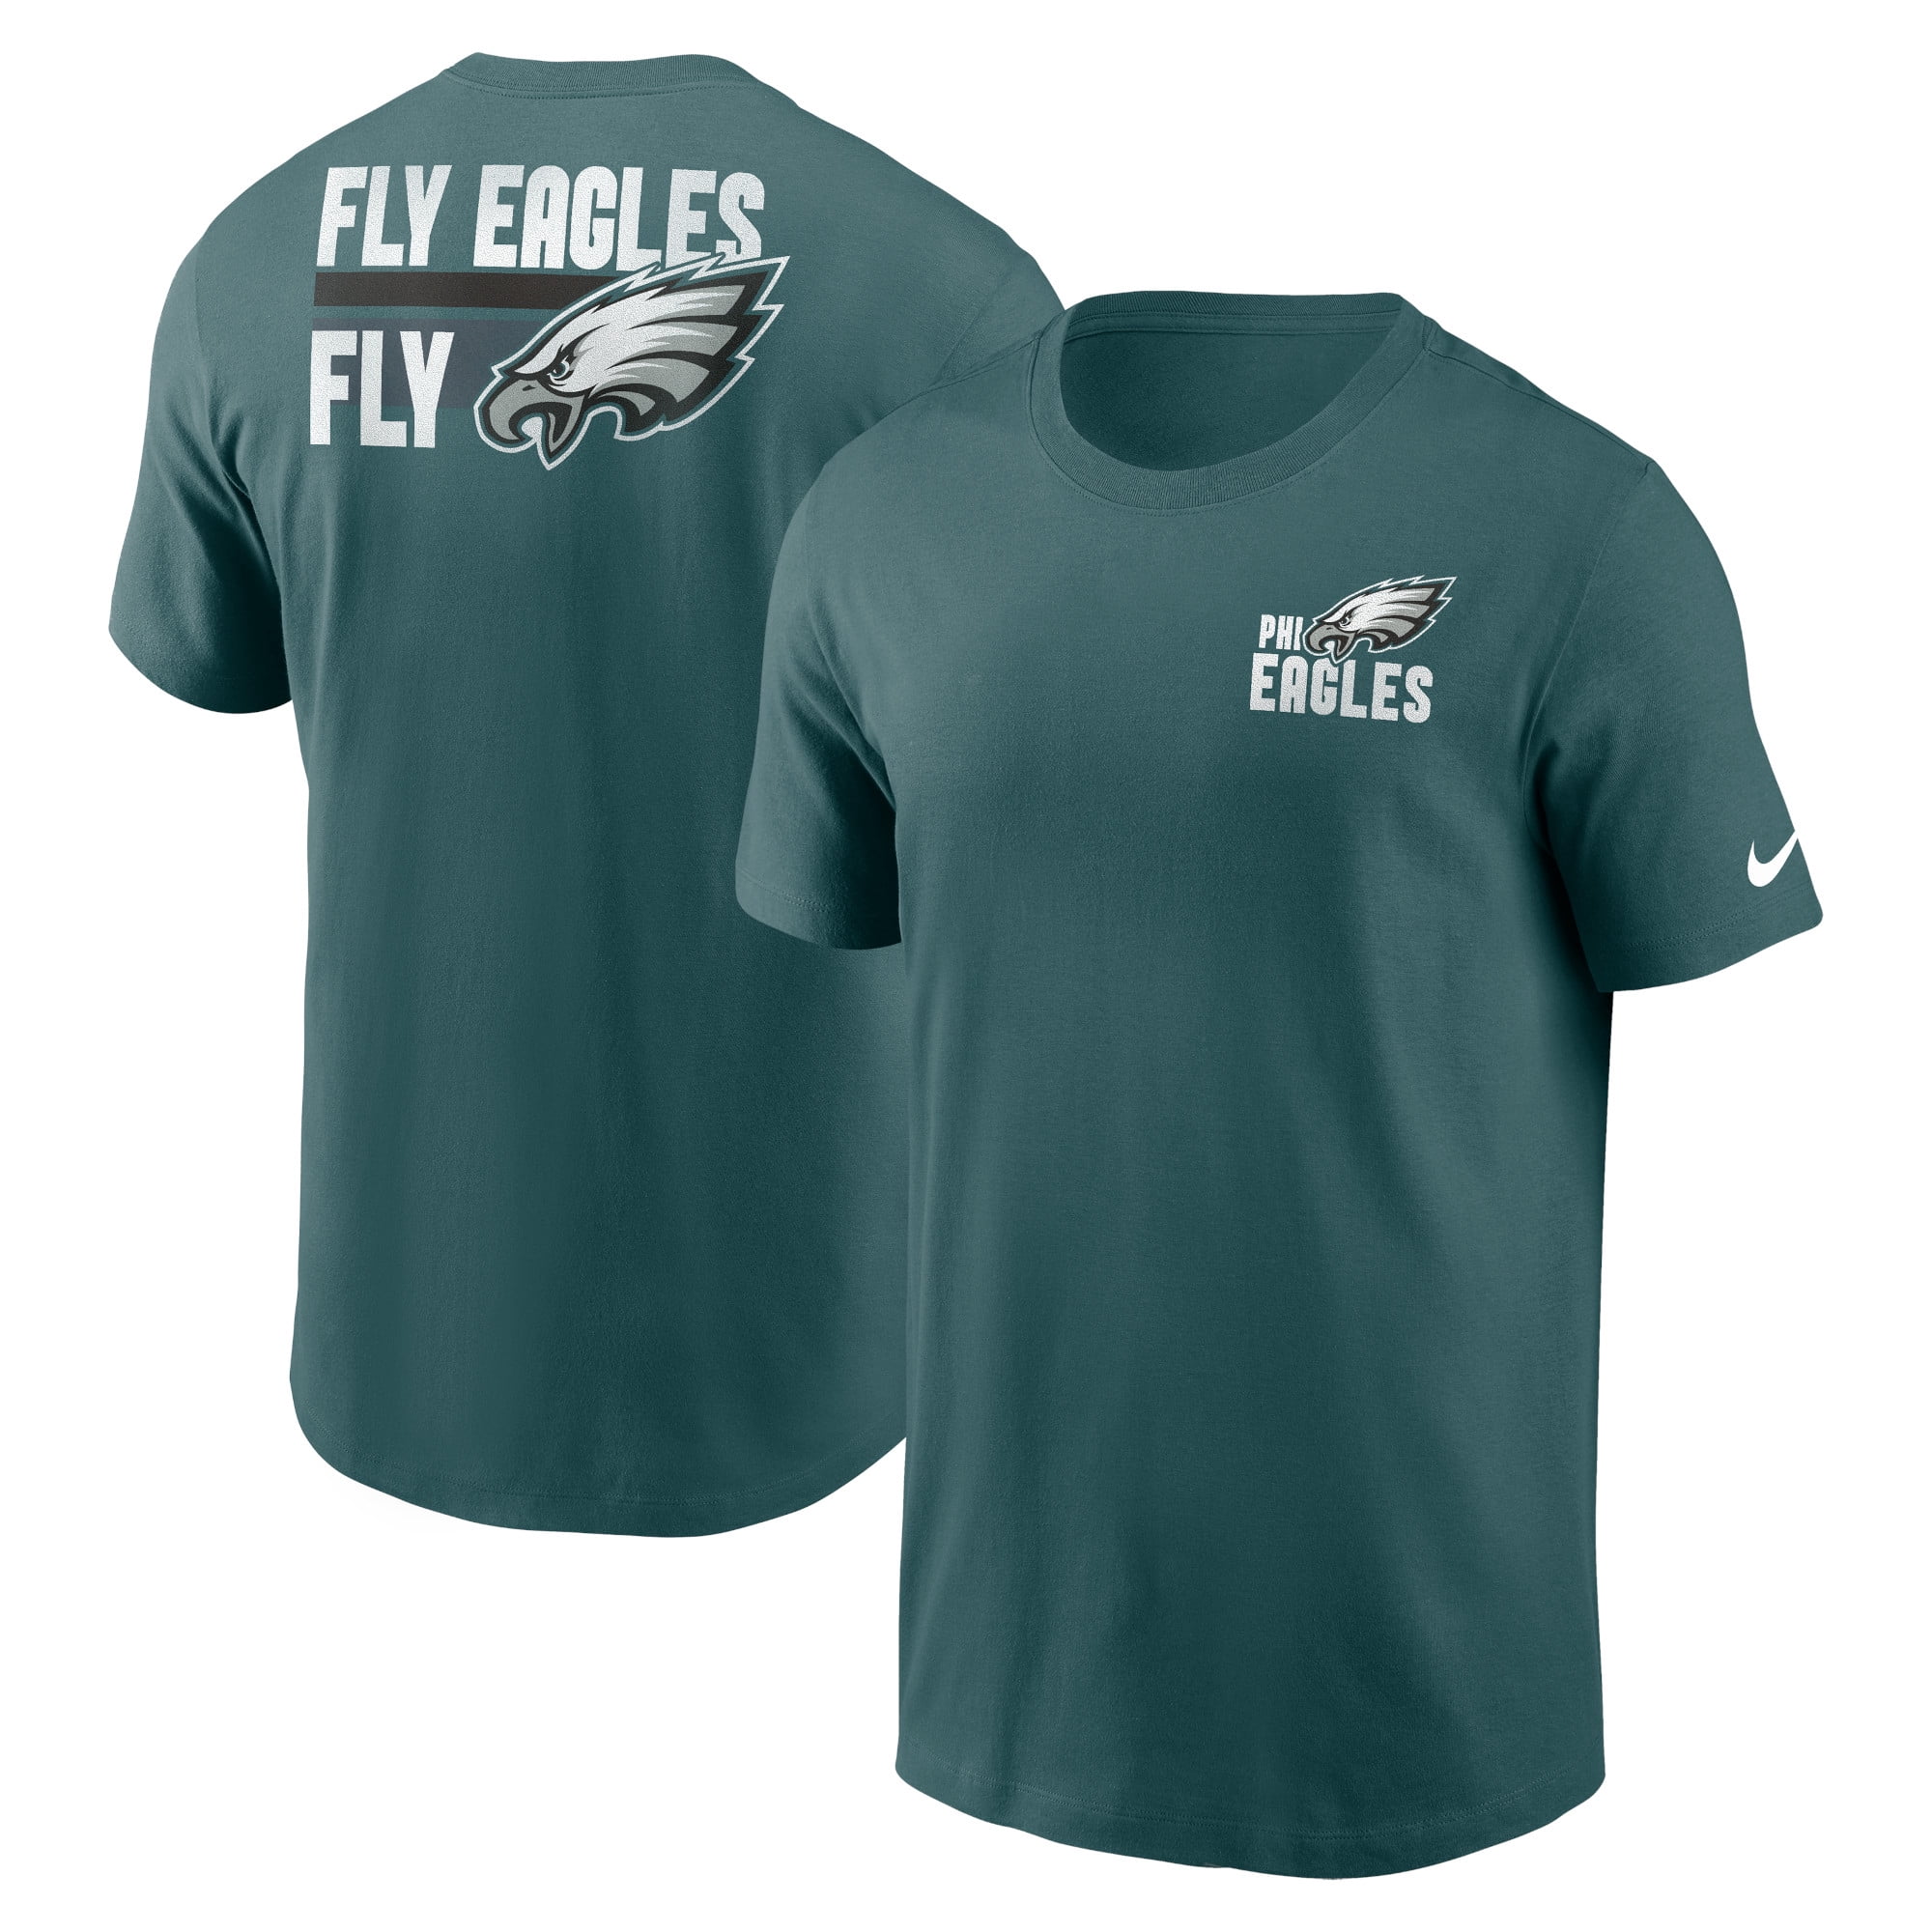 Men's Philadelphia Eagles Gear, Mens Eagles Apparel, Guys